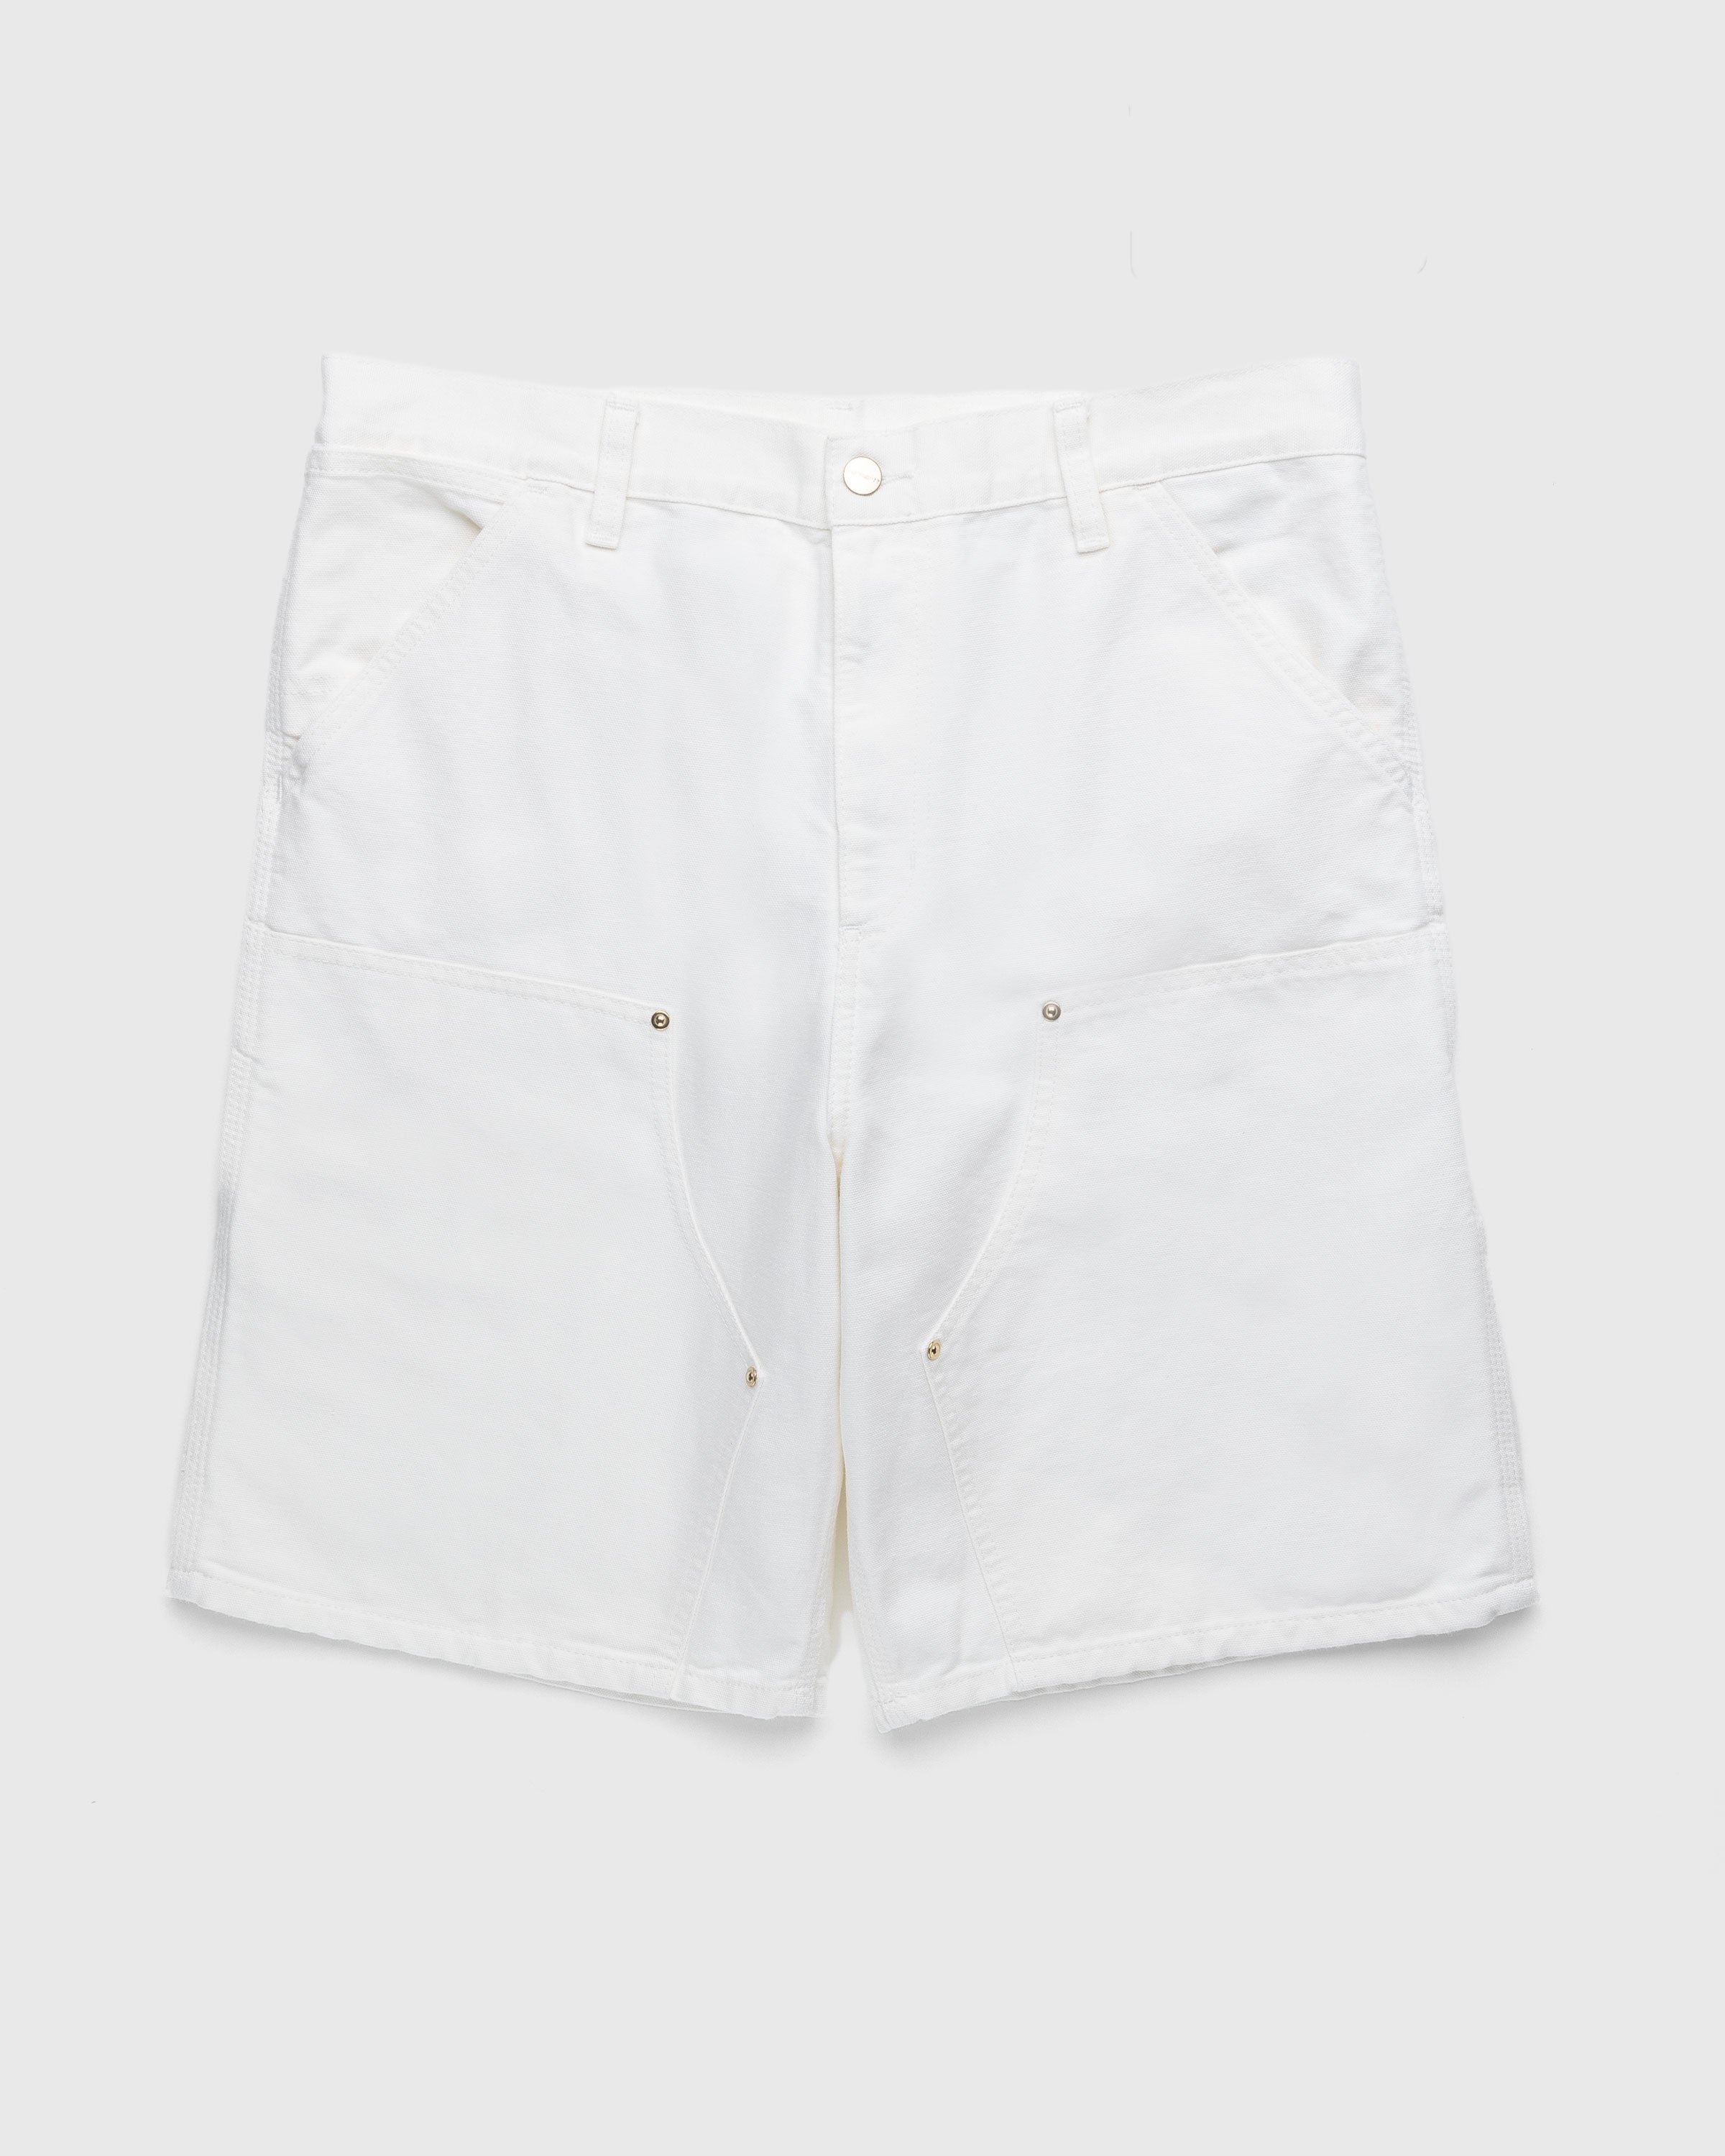 Carhartt WIP – Double Knee Short White - Shorts - Beige - Image 1